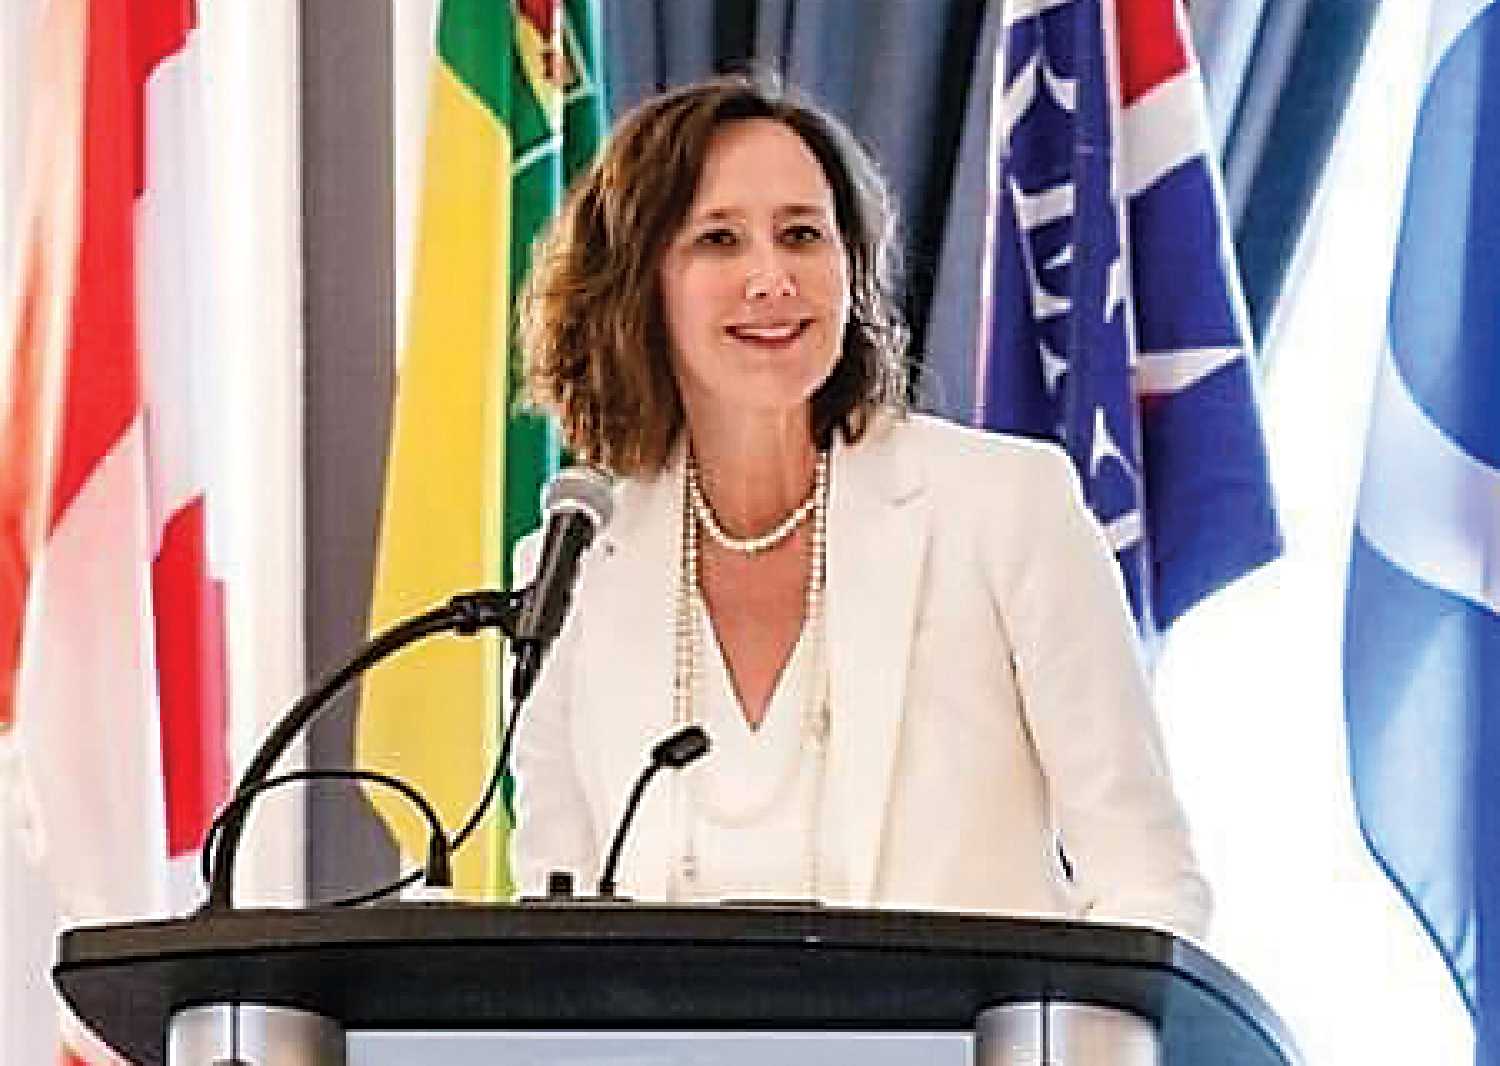 Saskatchewan Minister of Energy and Resources Bronwyn Eyre